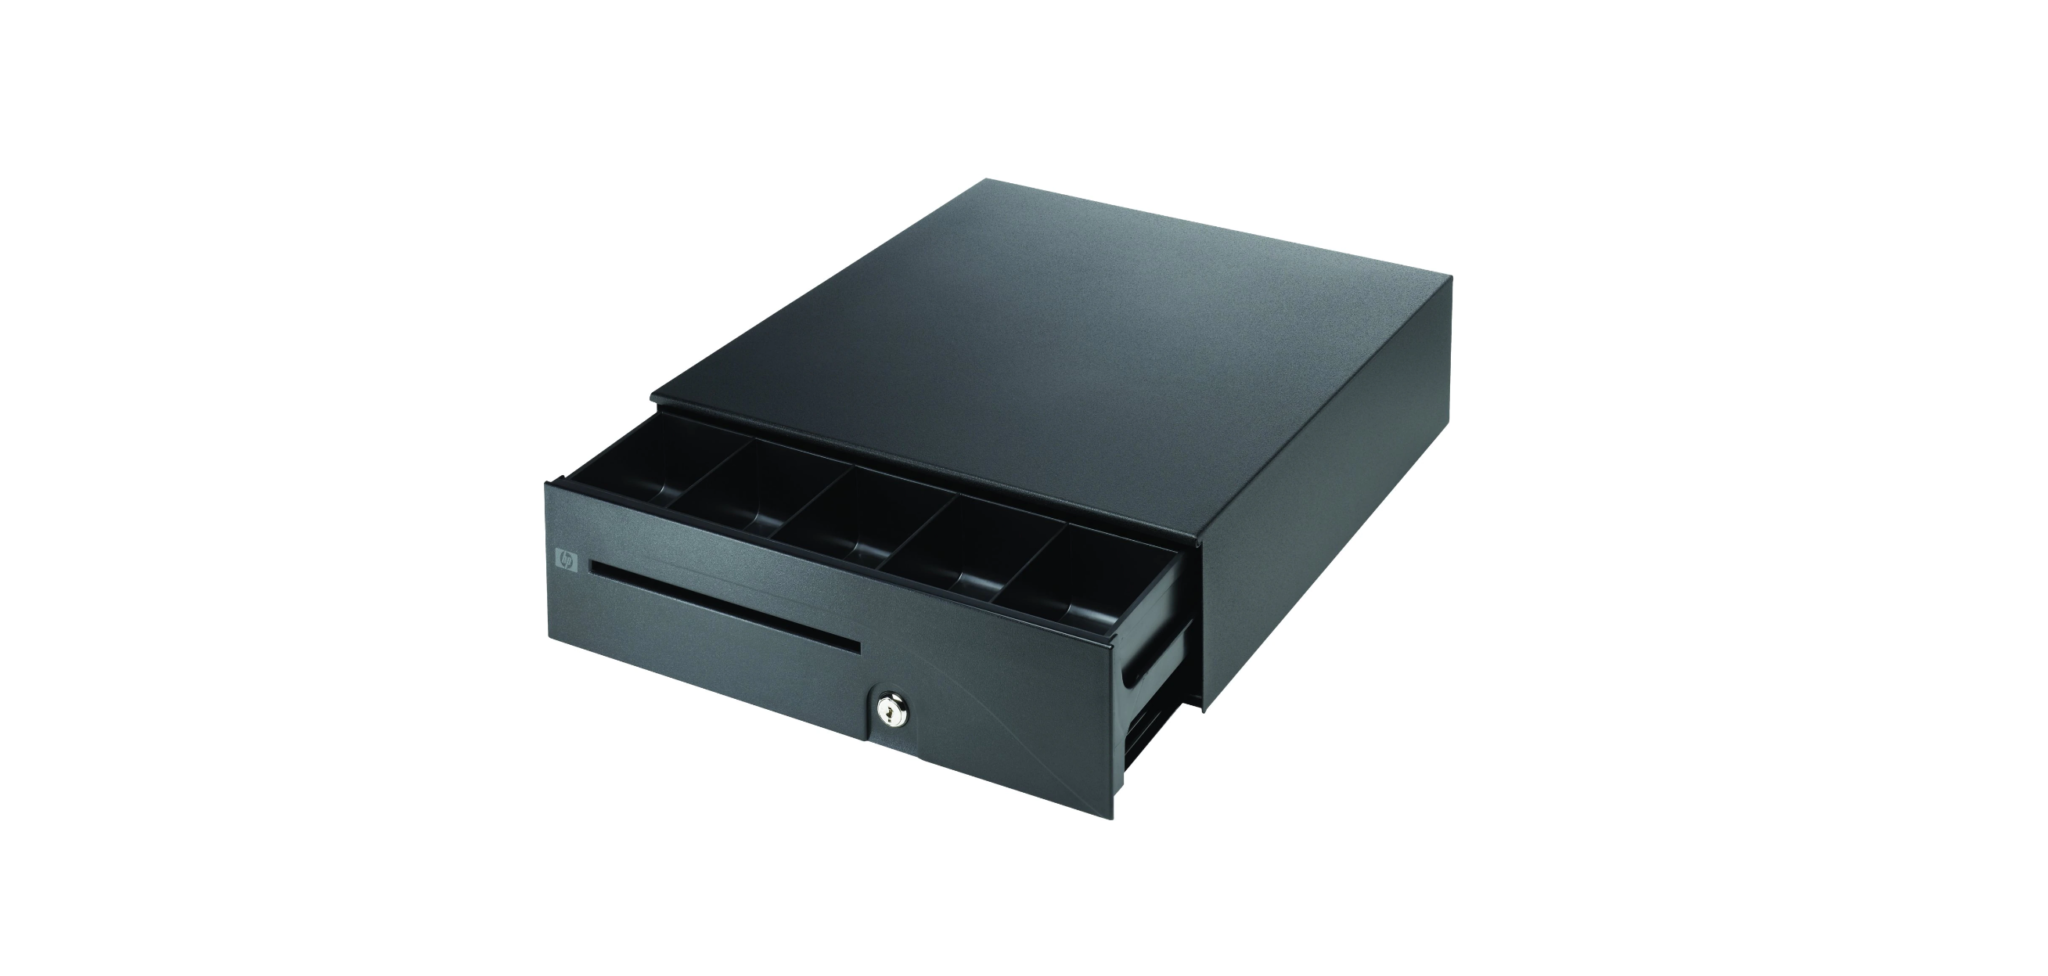 LaserJet Enterprise M806 Printer series